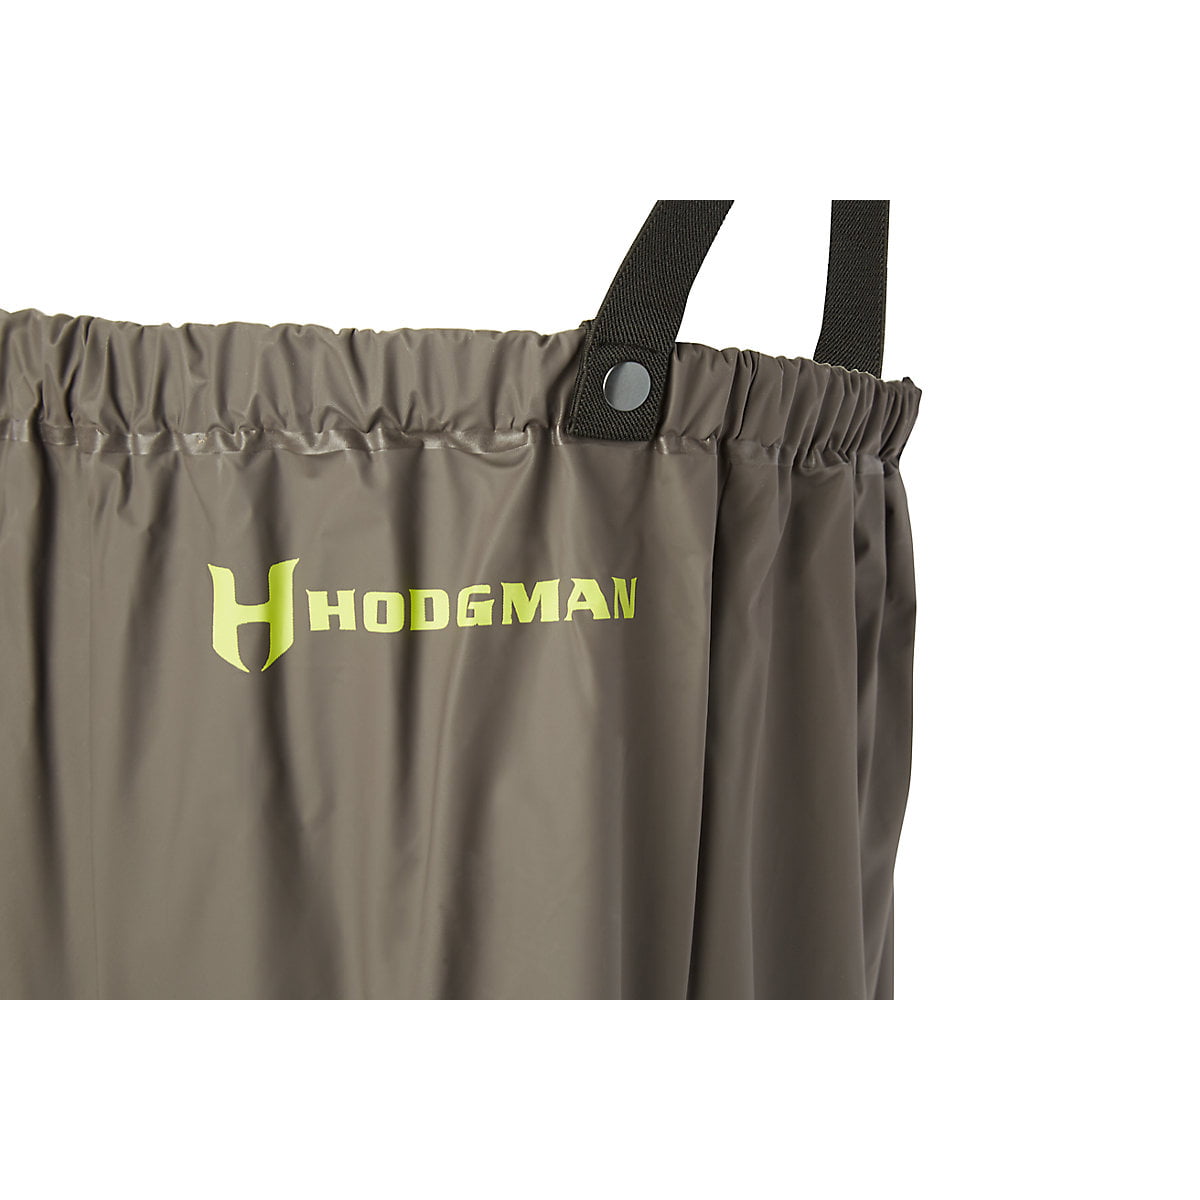 Hodgman GMWDE Gamewade PVC Packable Chest Waders 